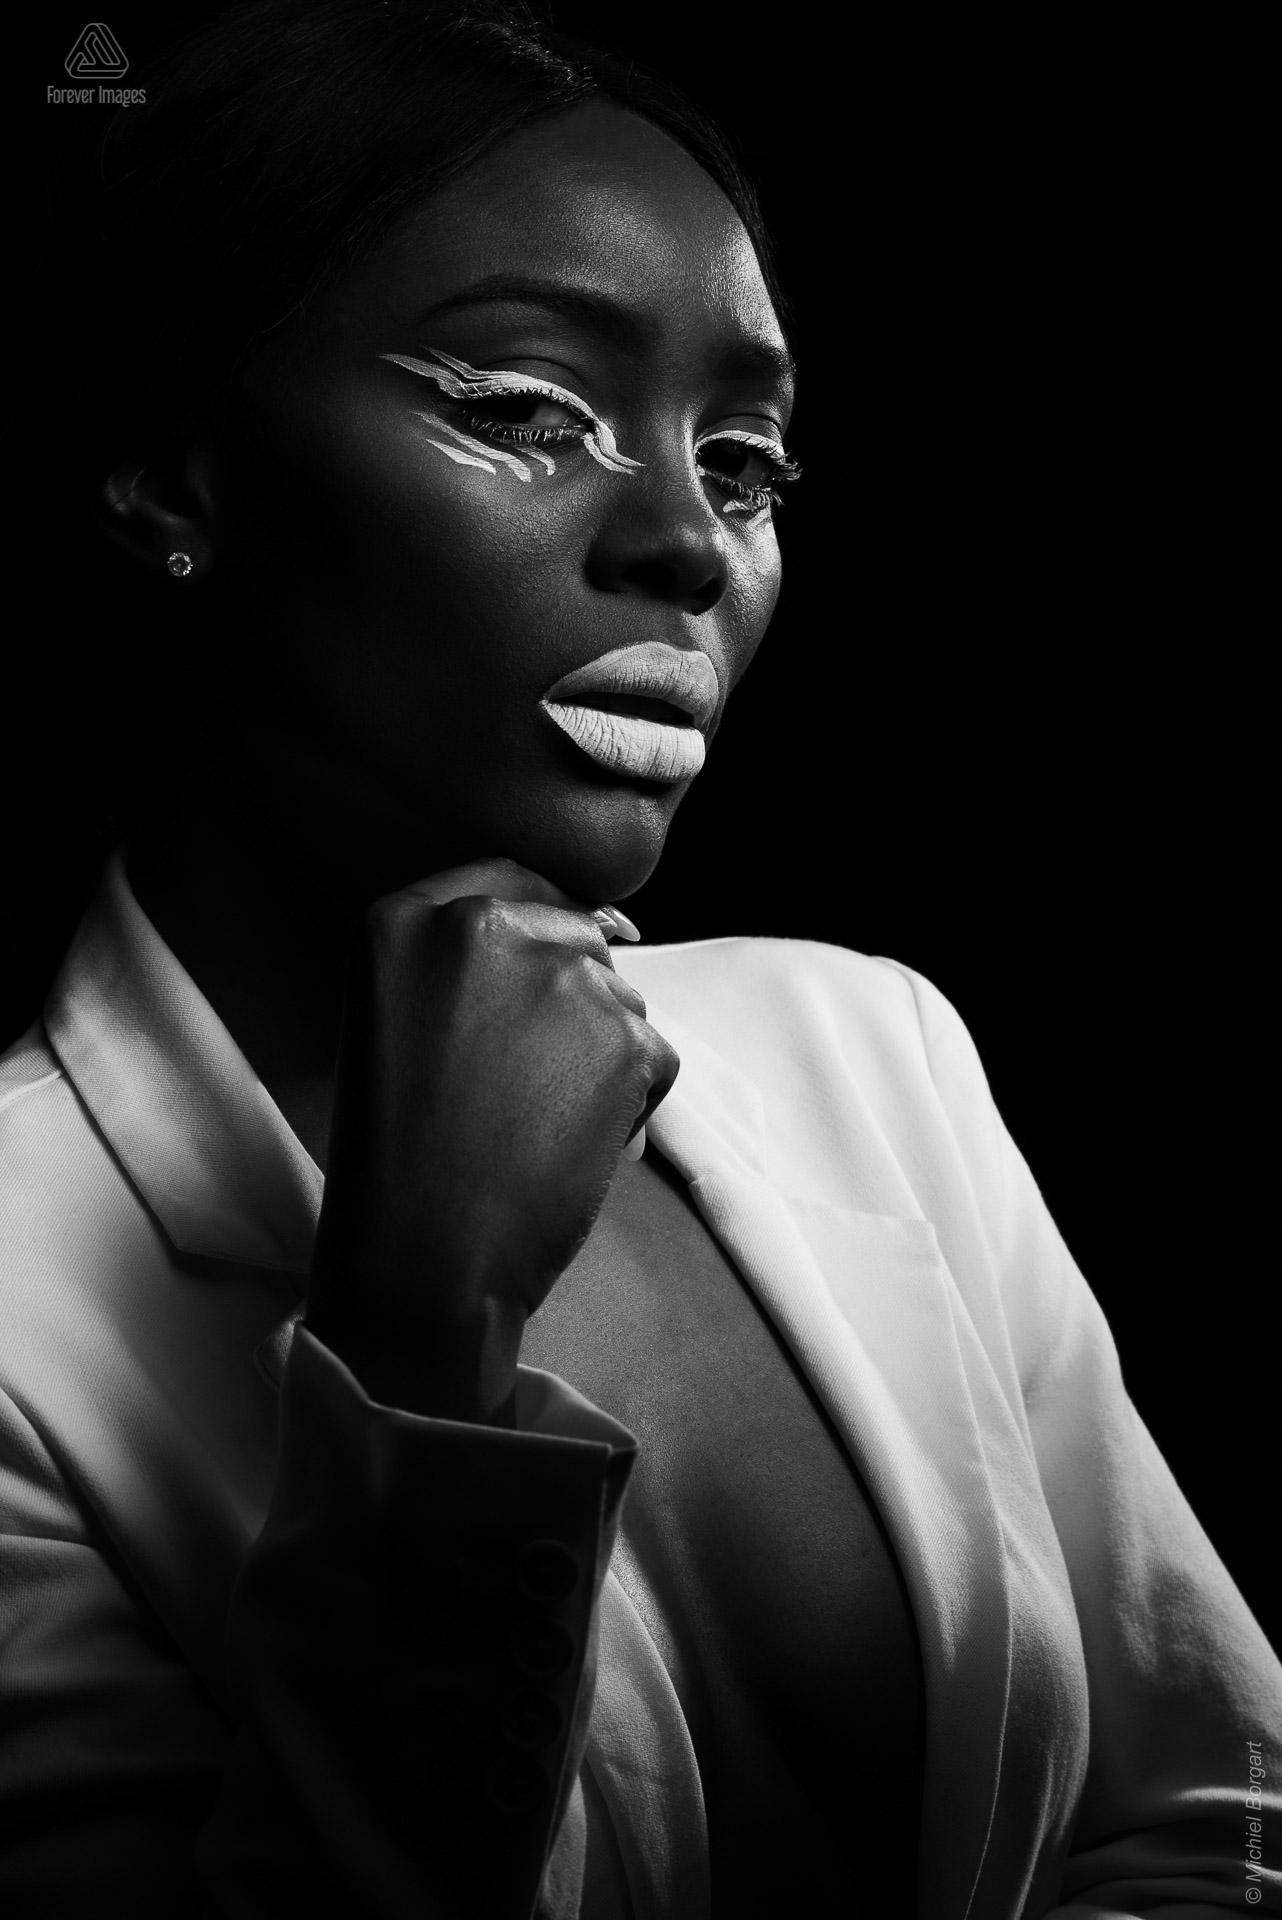 Portretfoto zwart-wit glamourshoot witte make-up wit jasje low key | Mariana Pietersz Natasha Mondesir | Portretfotograaf Michiel Borgart - Forever Images.